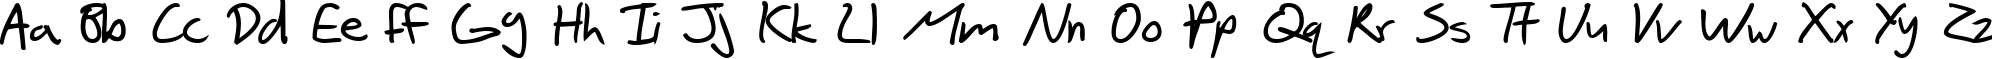 Пример написания английского алфавита шрифтом SF Scribbled Sans Bold